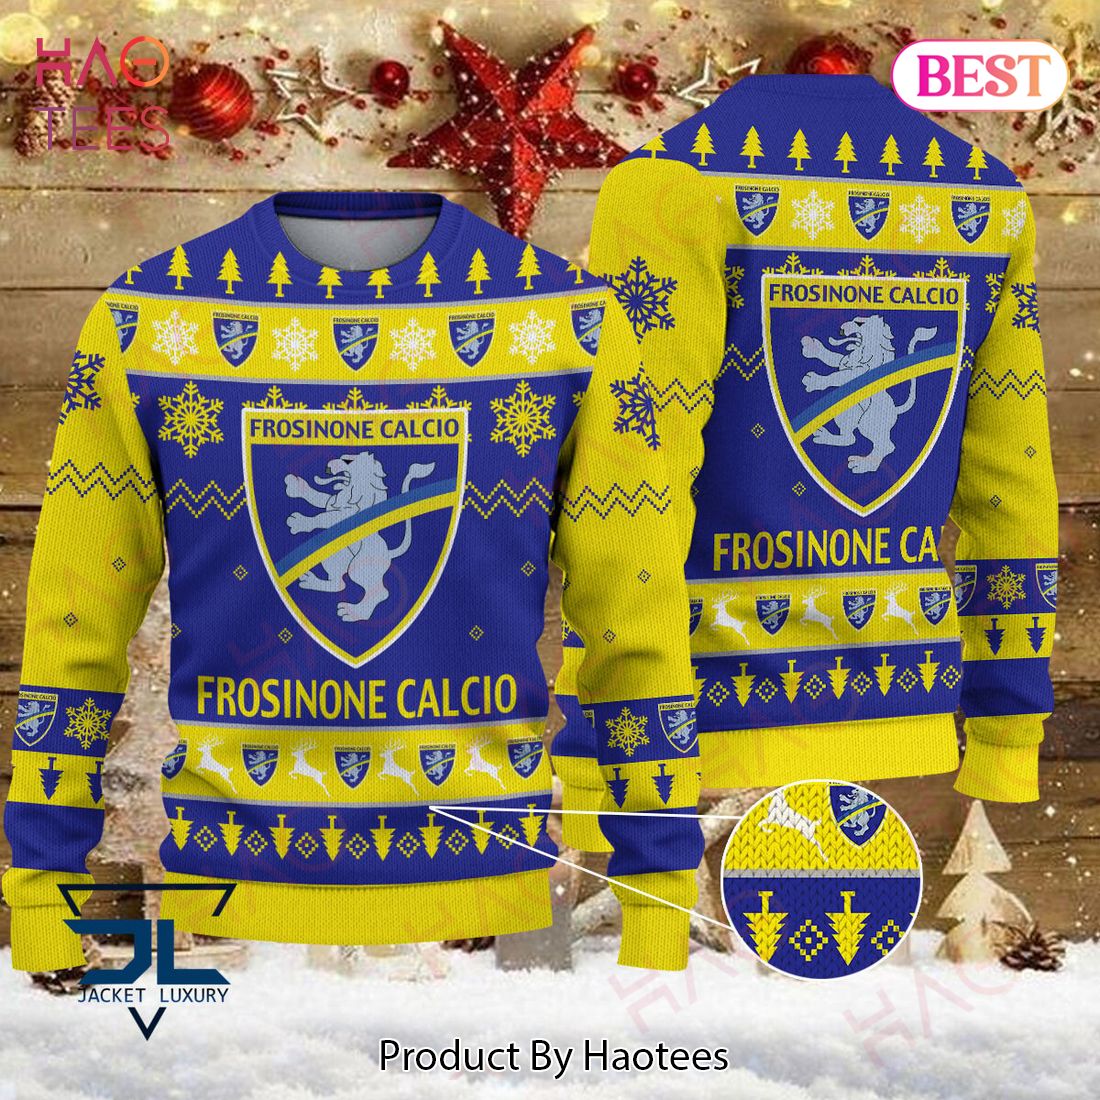 BEST Frosinone Calcio Christmas Luxury Brand Sweater Limited Edition